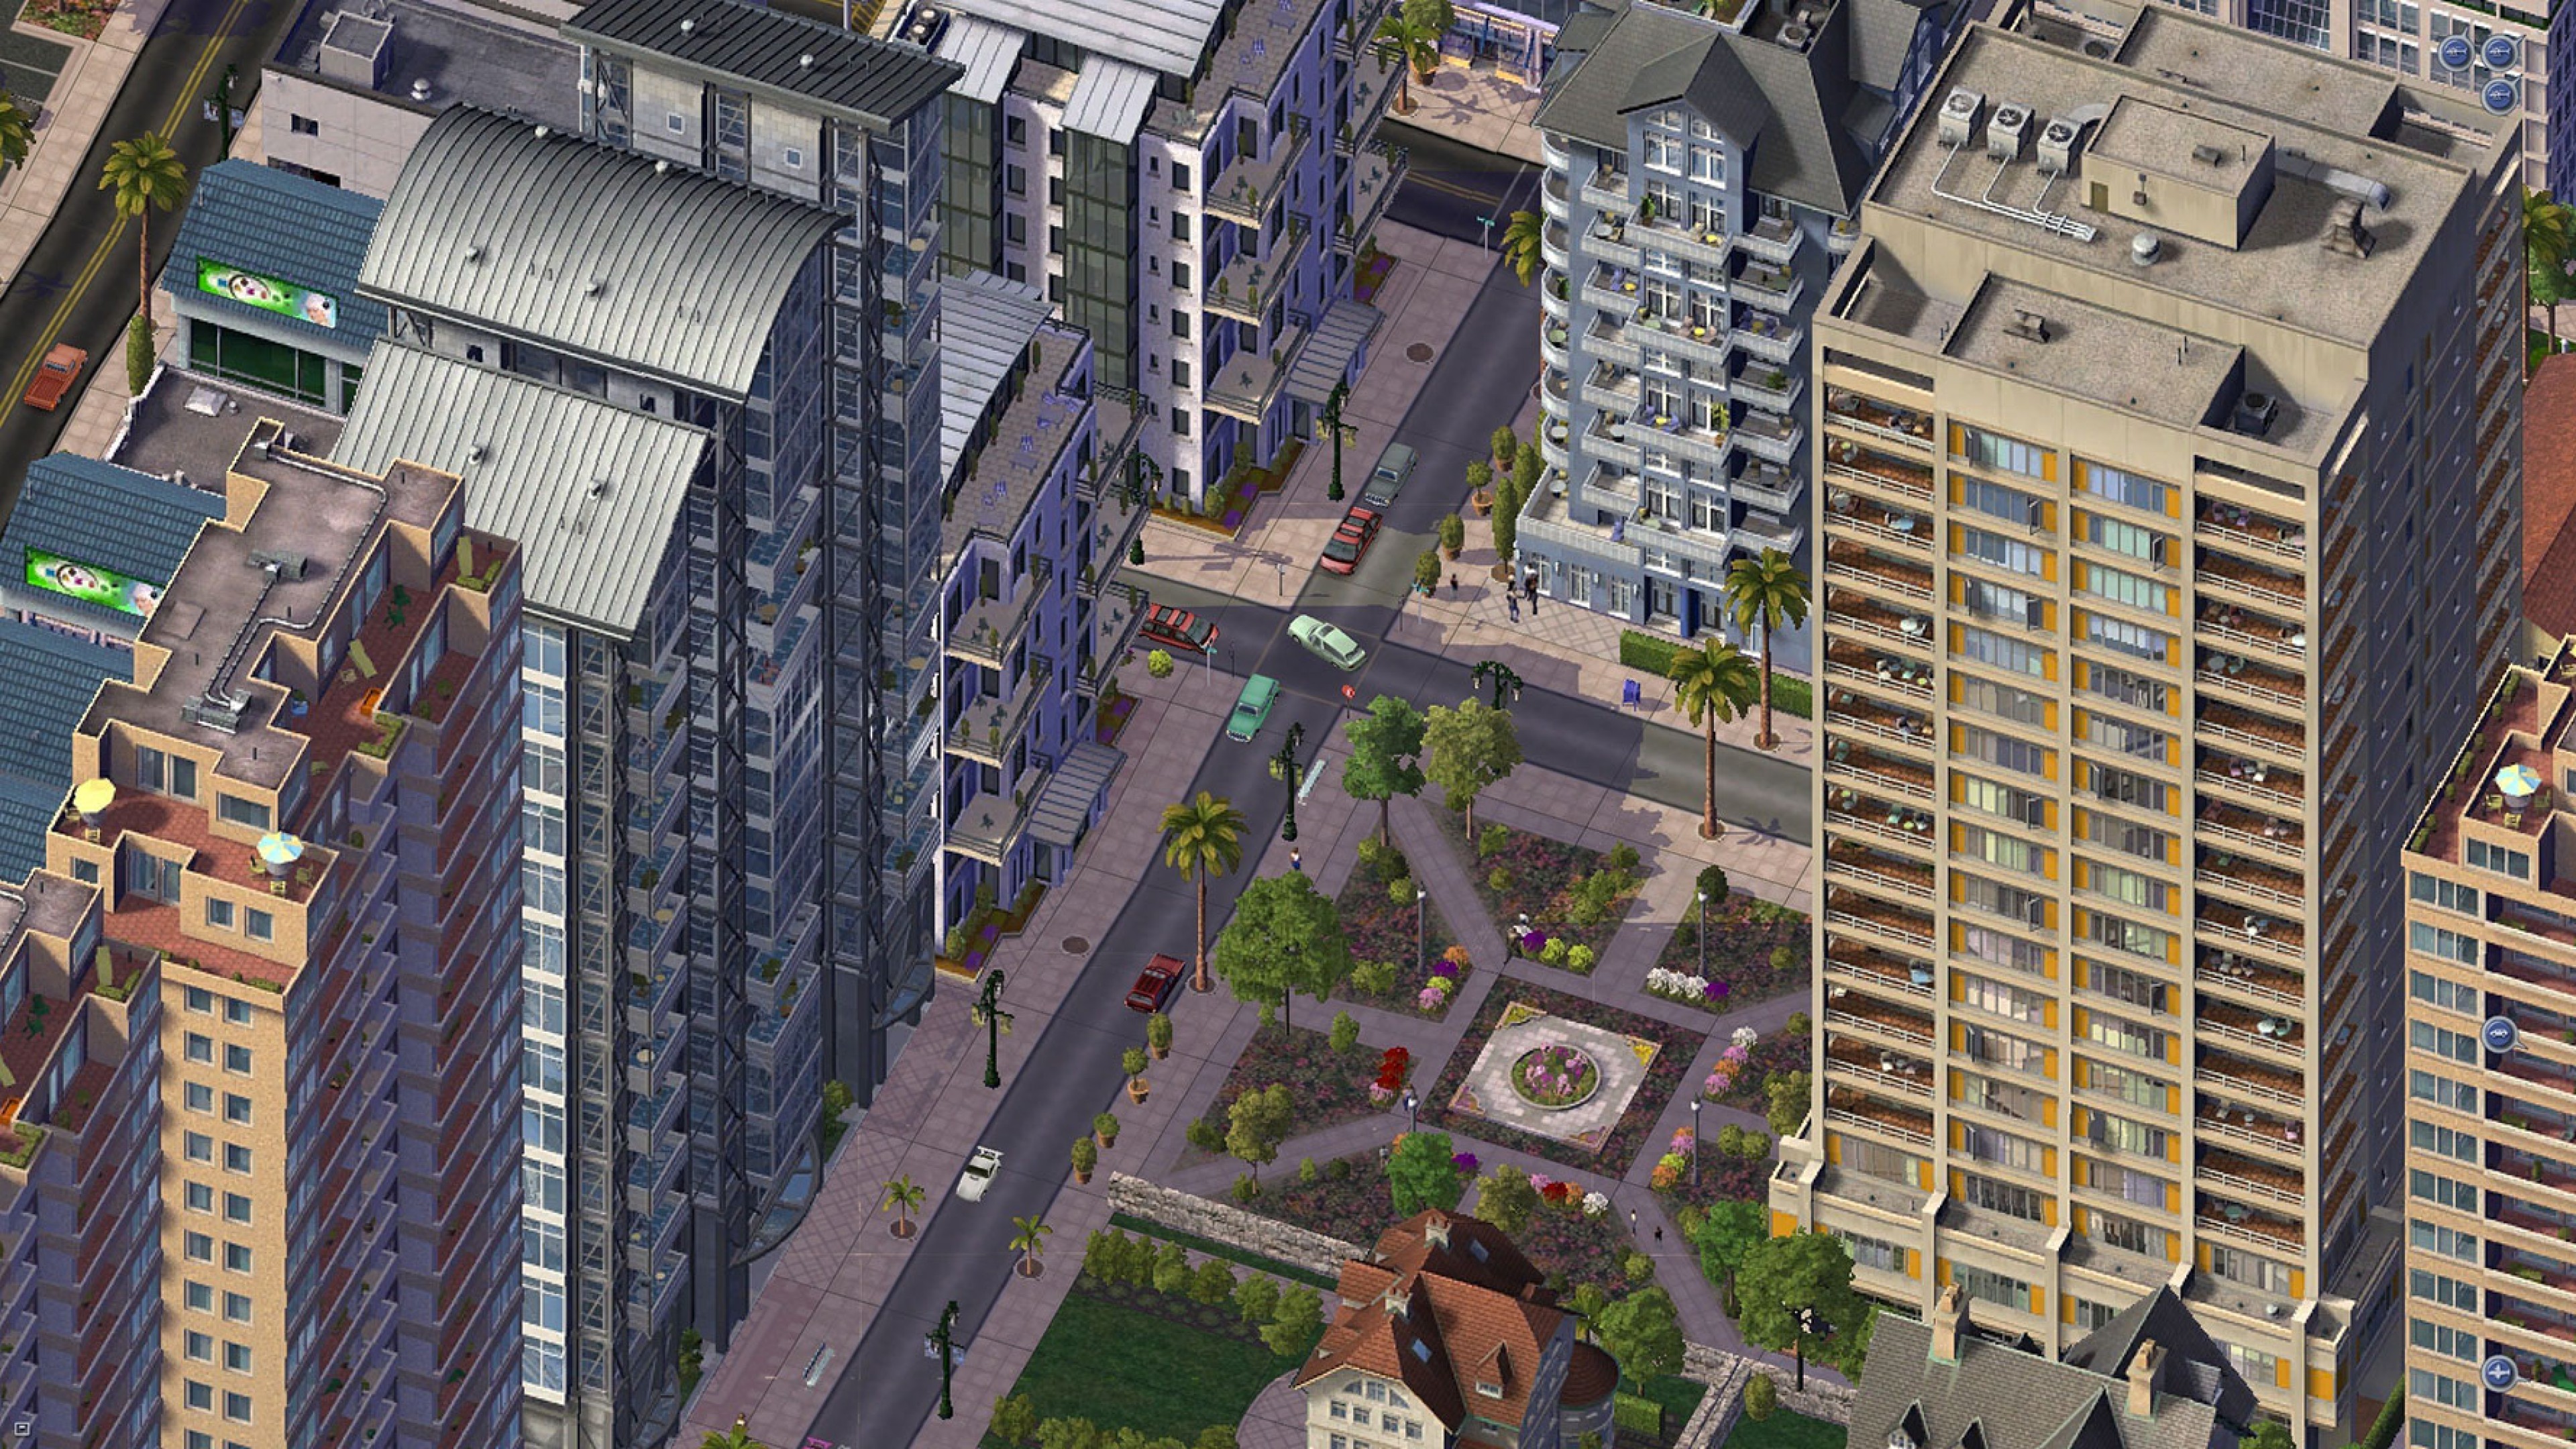 free sim city 4 download for mac